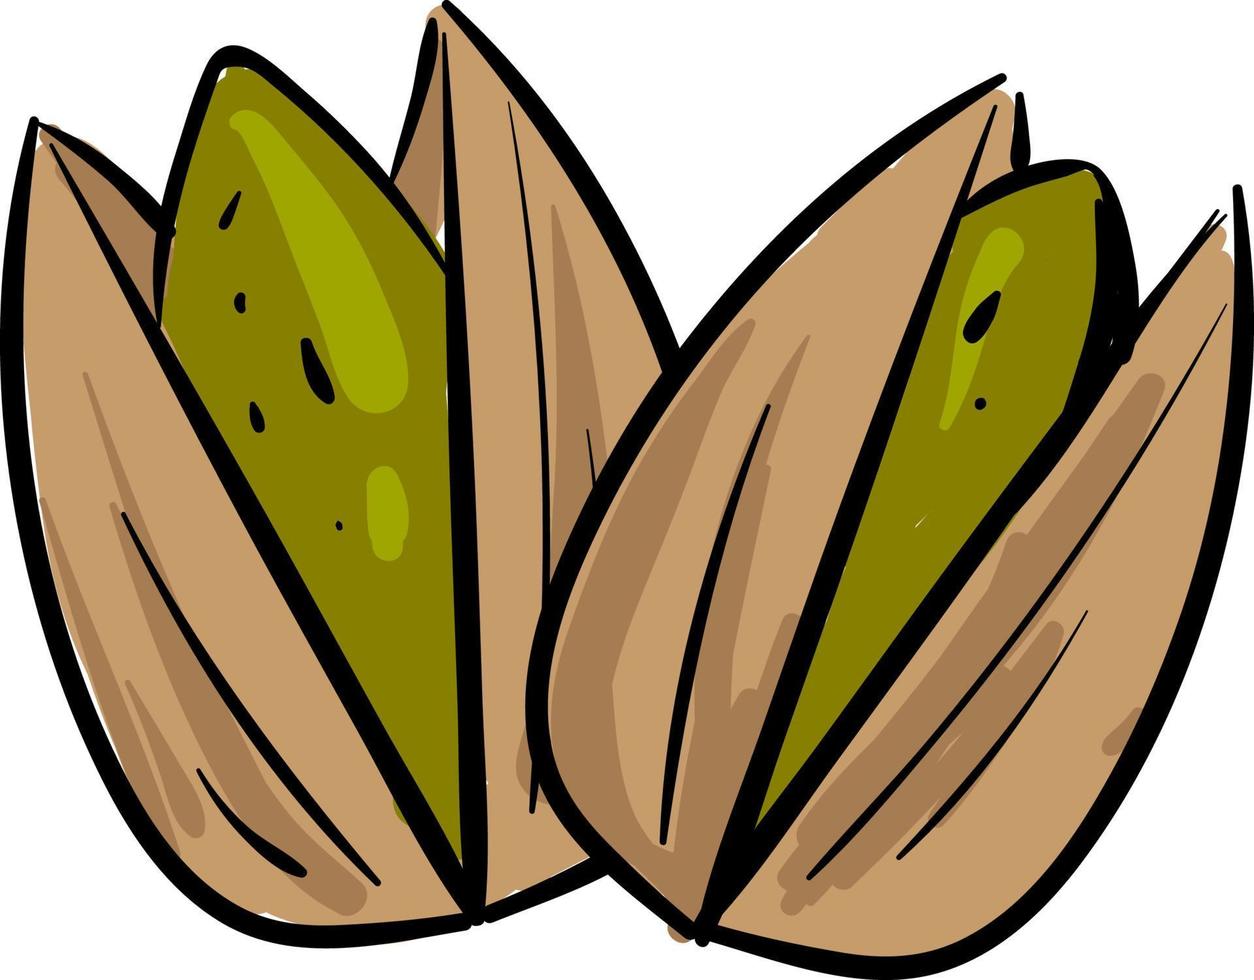 Open pistachios, illustration, vector on white background